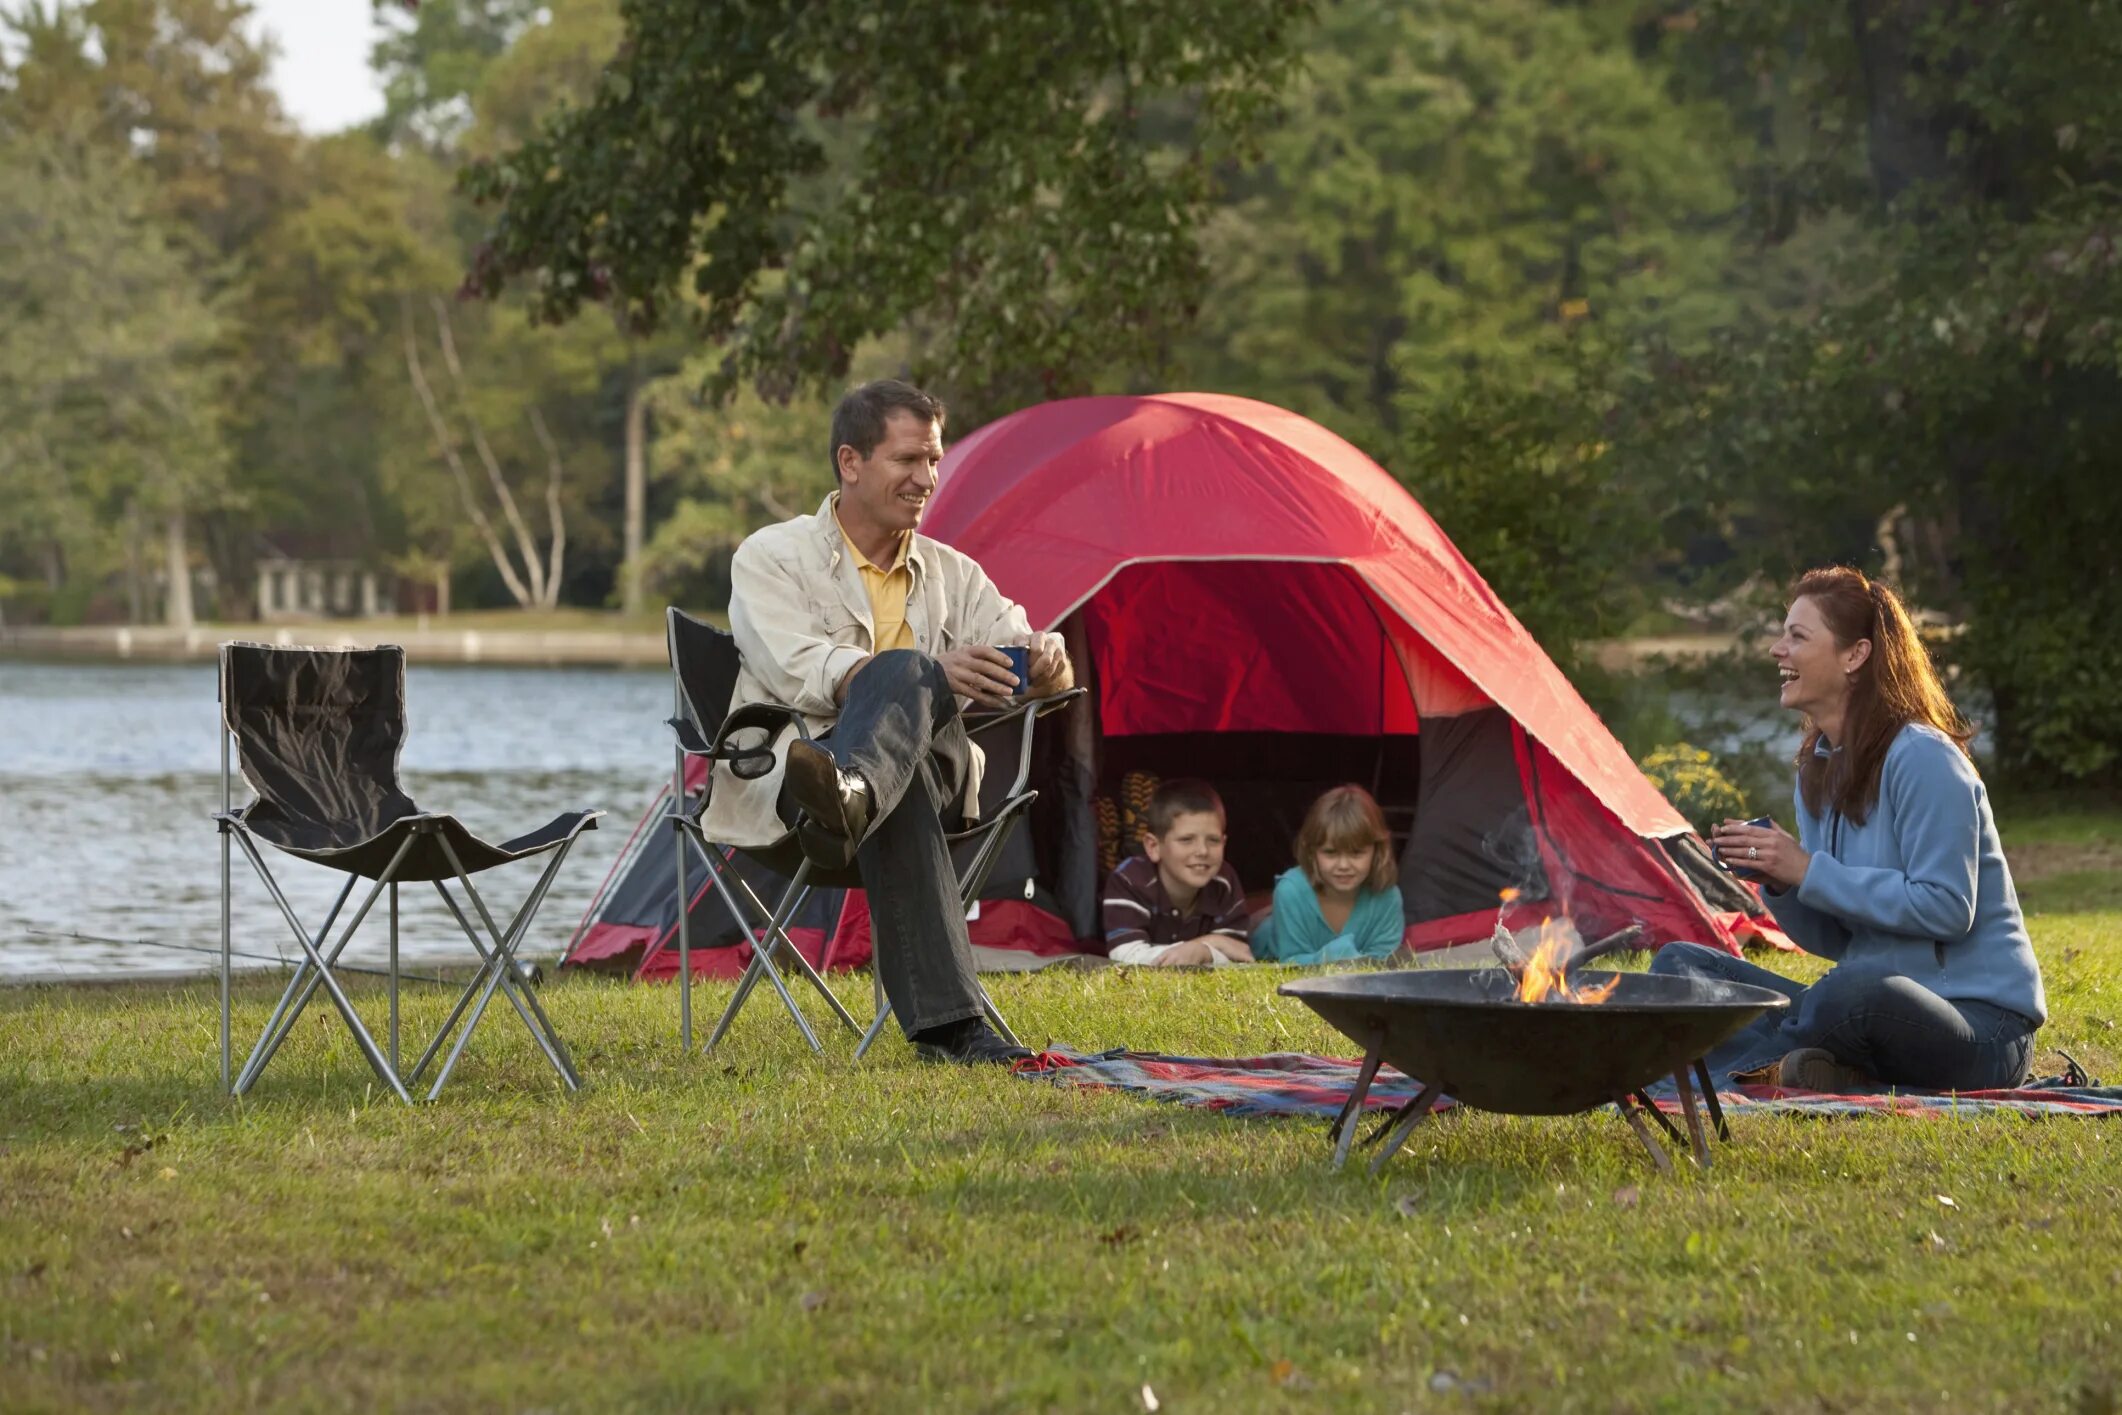 Палатка на природе. Отдыхаем на природе. Пикник с семьей на природе. Пикник на природе с палатками. Outdoor camp